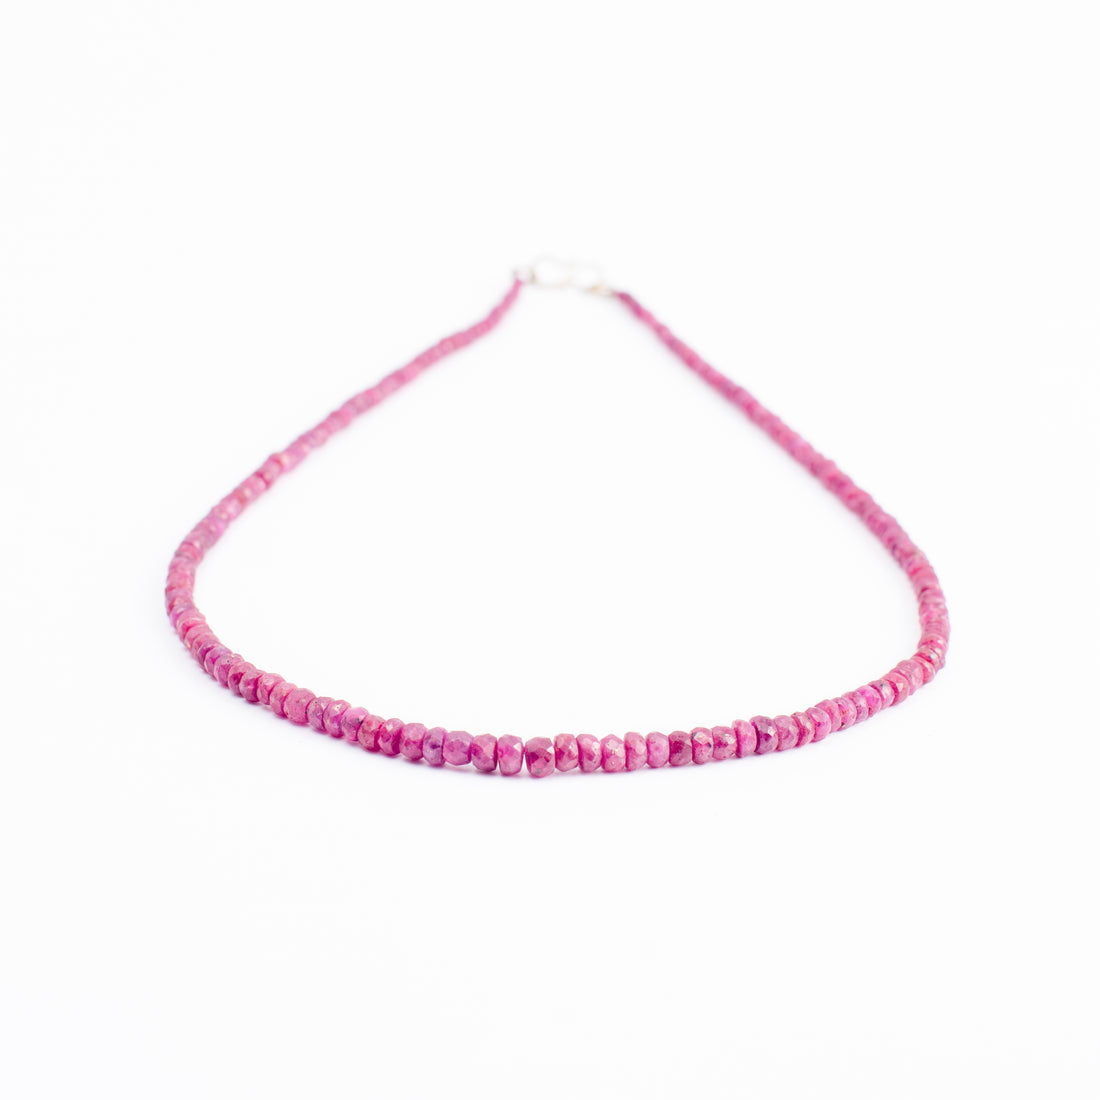 Ruby Burma oval Beads Necklace 3mm